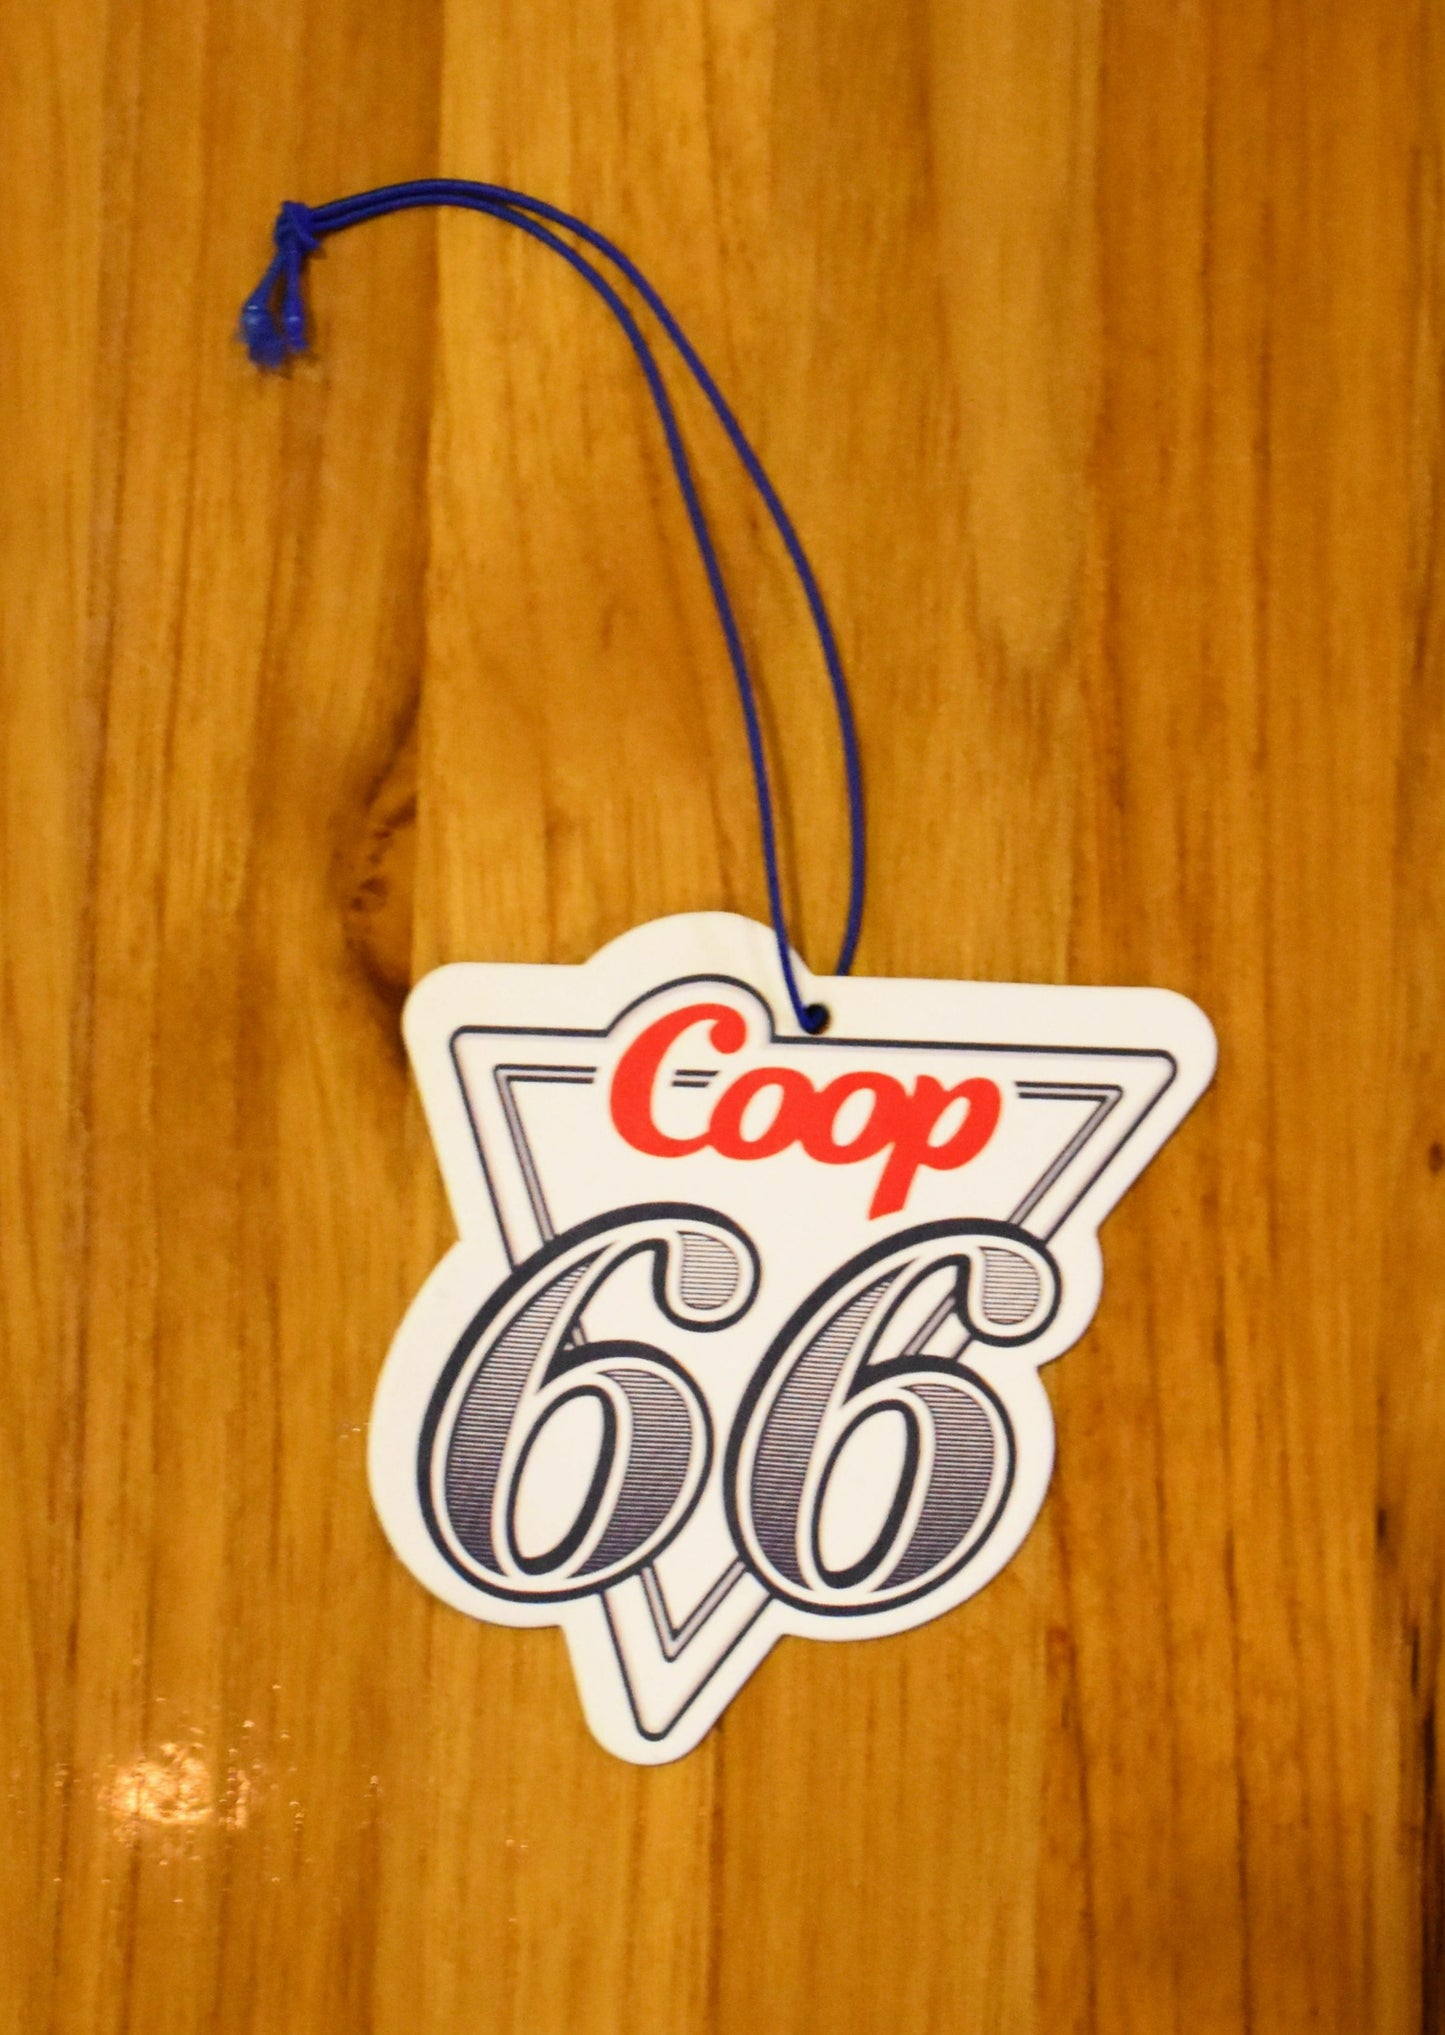 COOP 66 Car Freshener